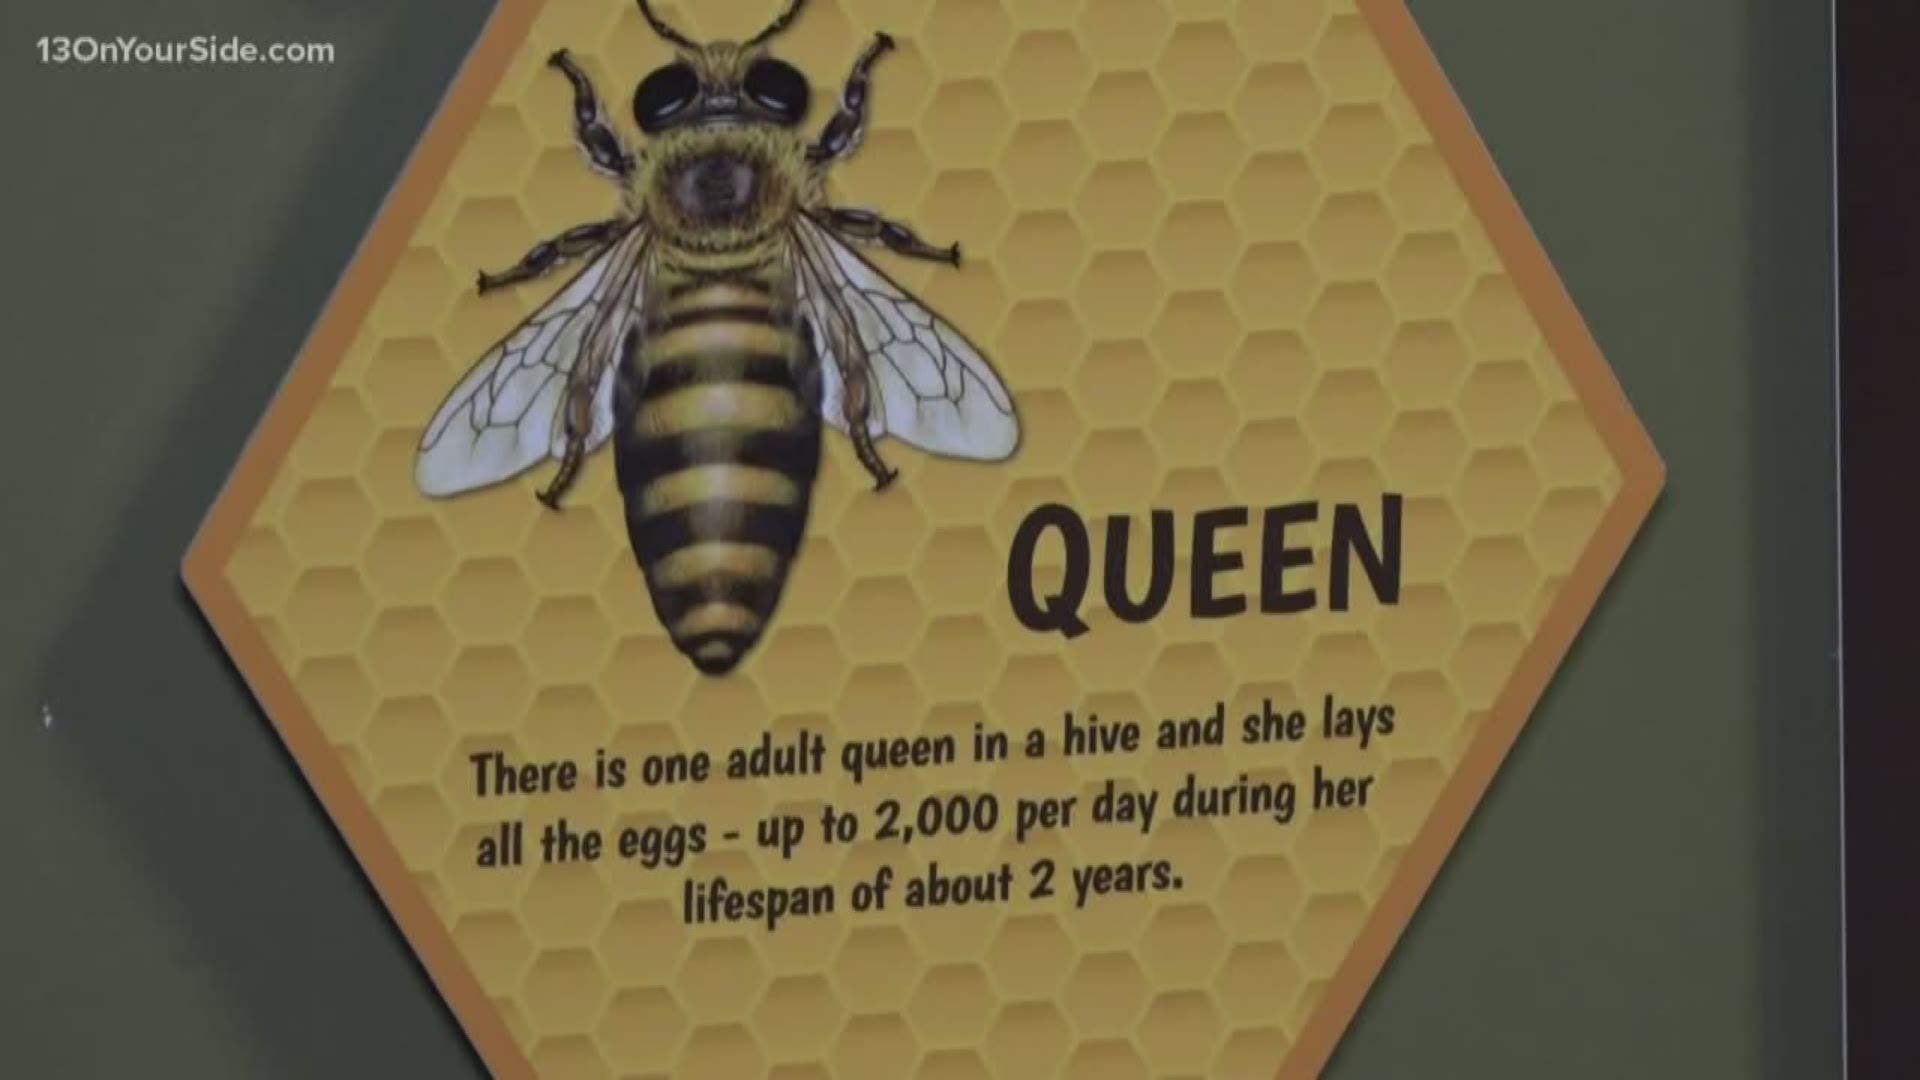 Honey, I'm home! John Ball Zoo has new bee hive exhibit 